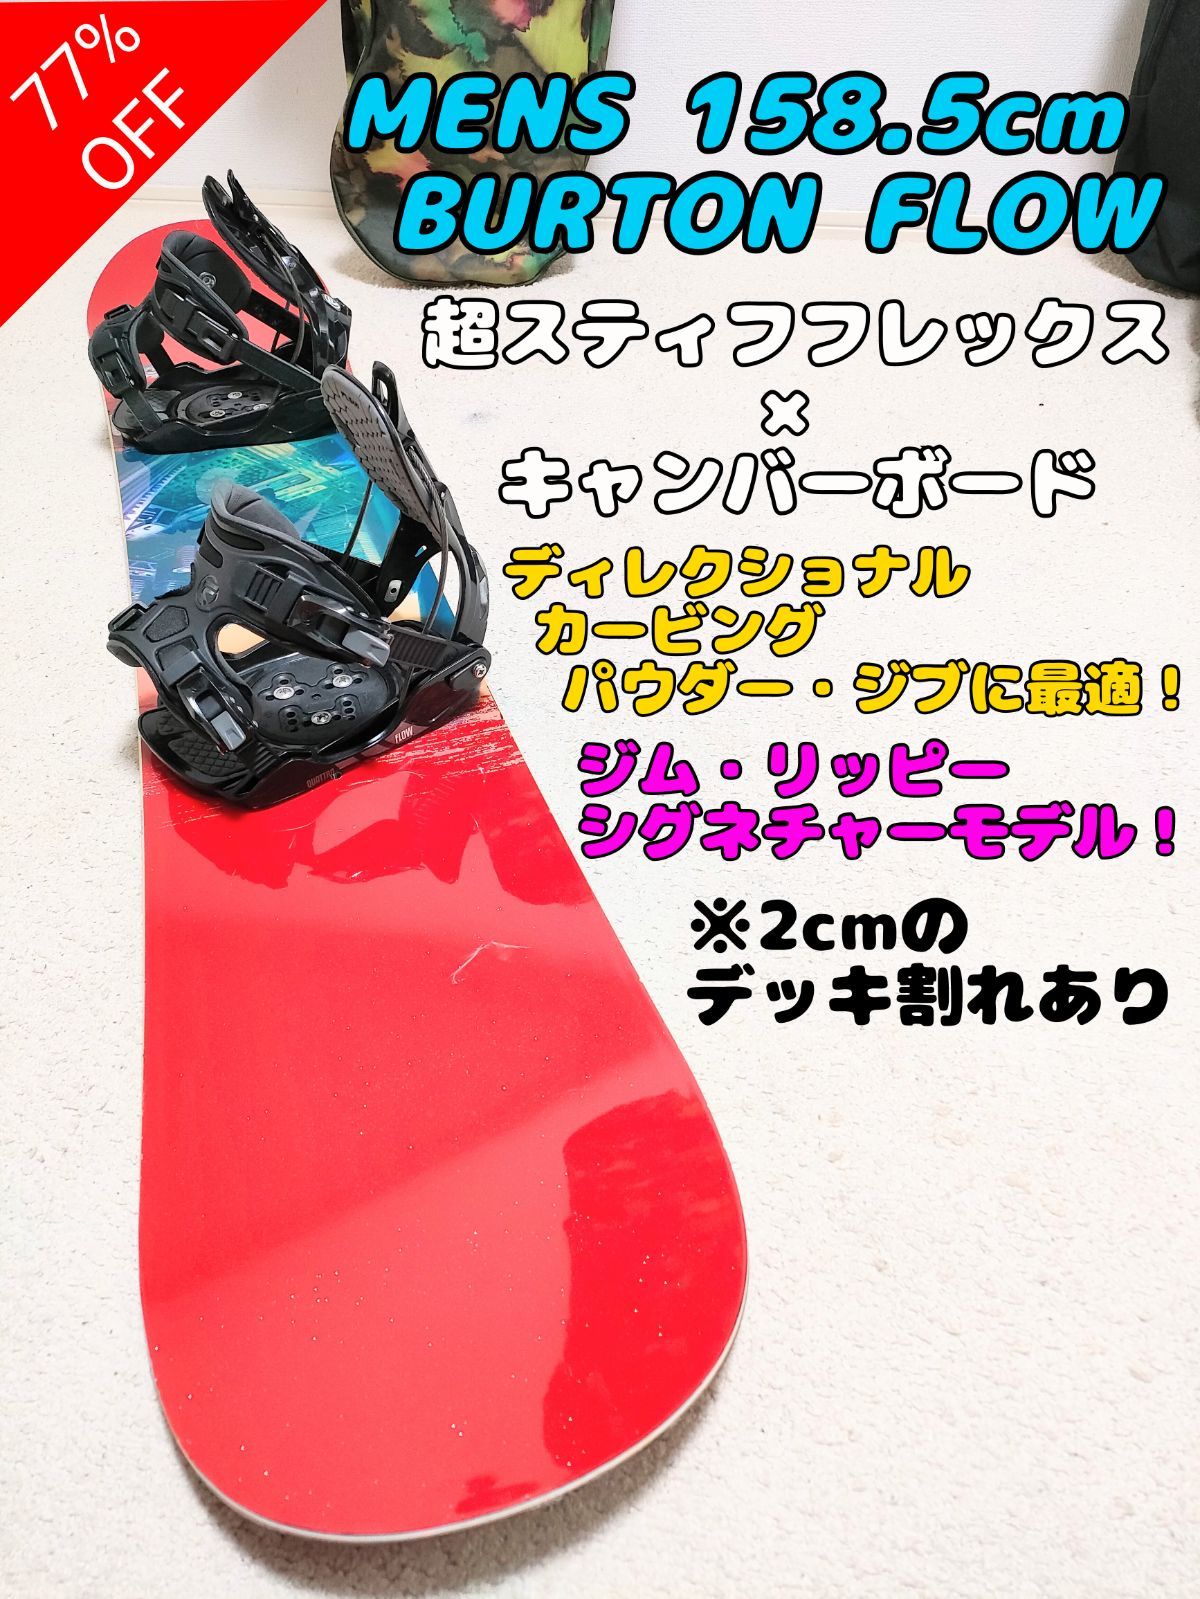 BURTON FLOW ワックス塗って発送もできます！定価総額12.2万！YUKIスノボ